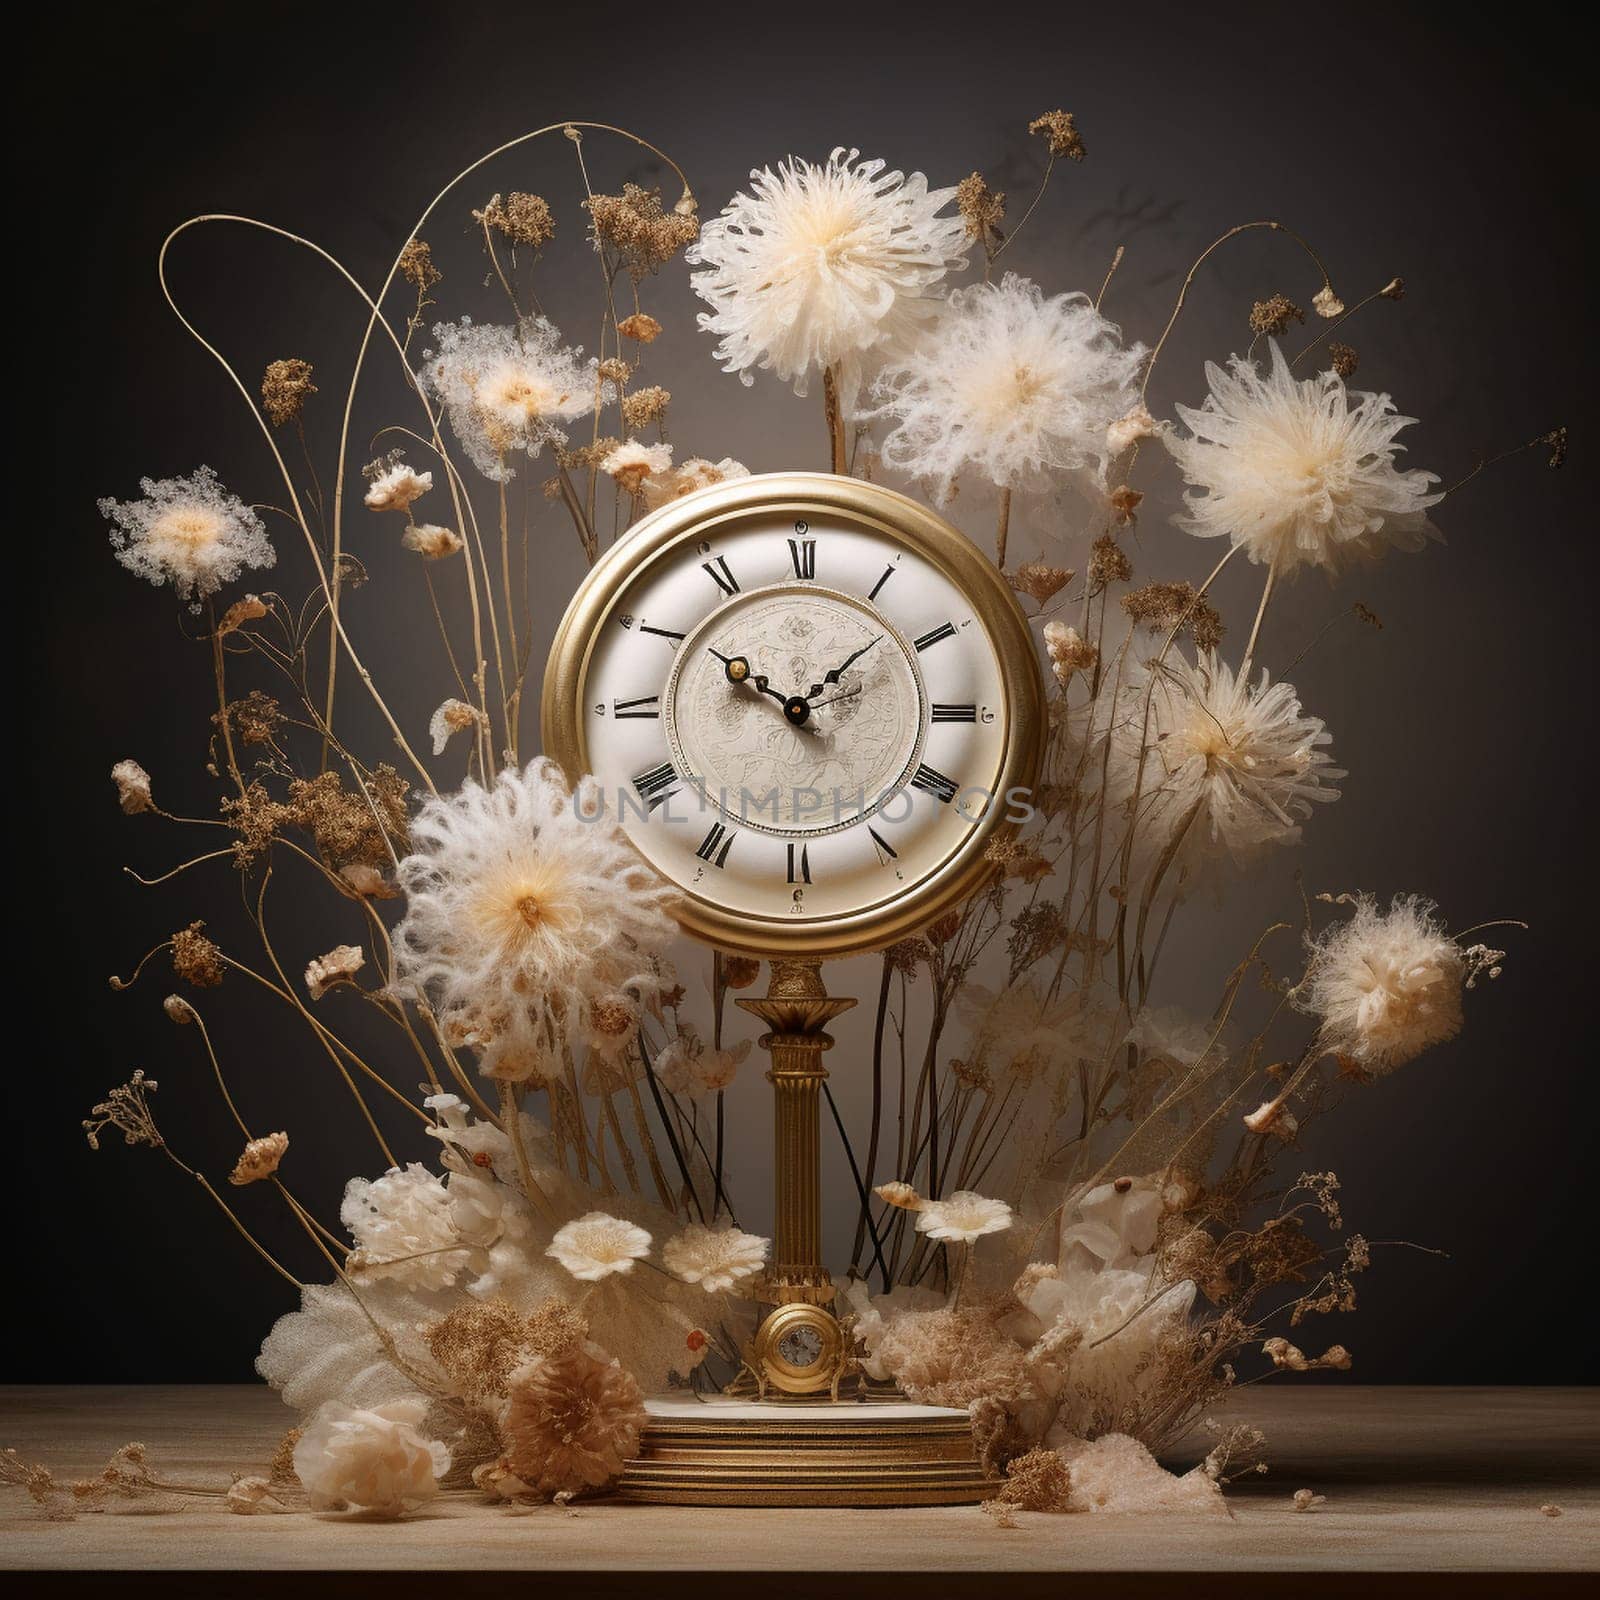 Analog Splendor: A Surreal Composition of a Mesmerizing Vintage Clock by Sahin